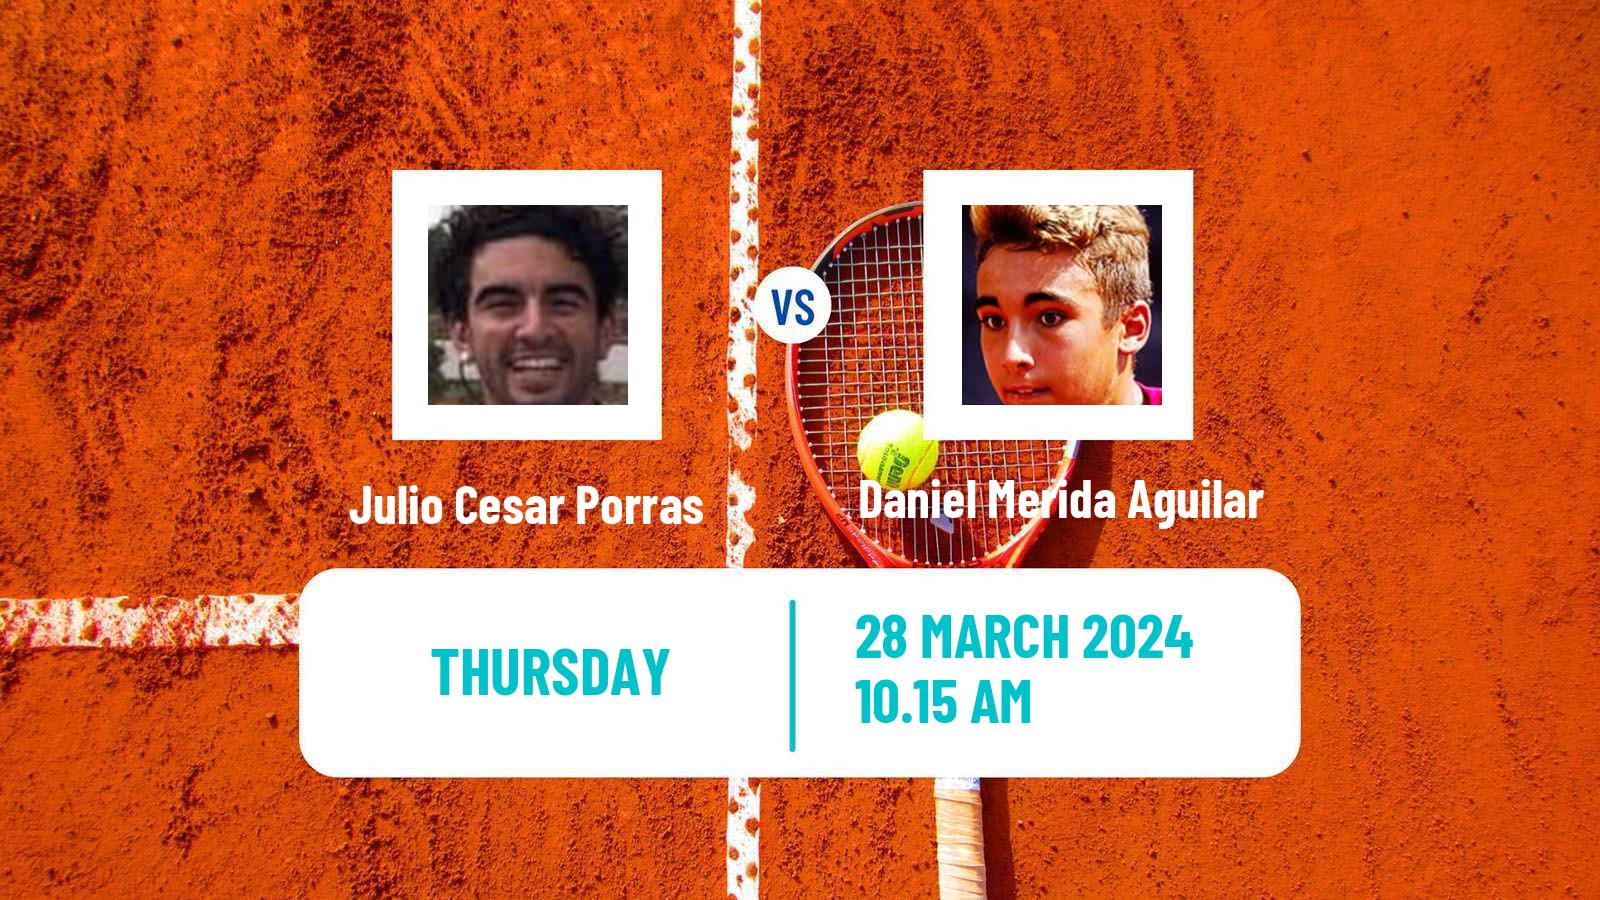 Tennis ITF M25 Tarragona Men Julio Cesar Porras - Daniel Merida Aguilar